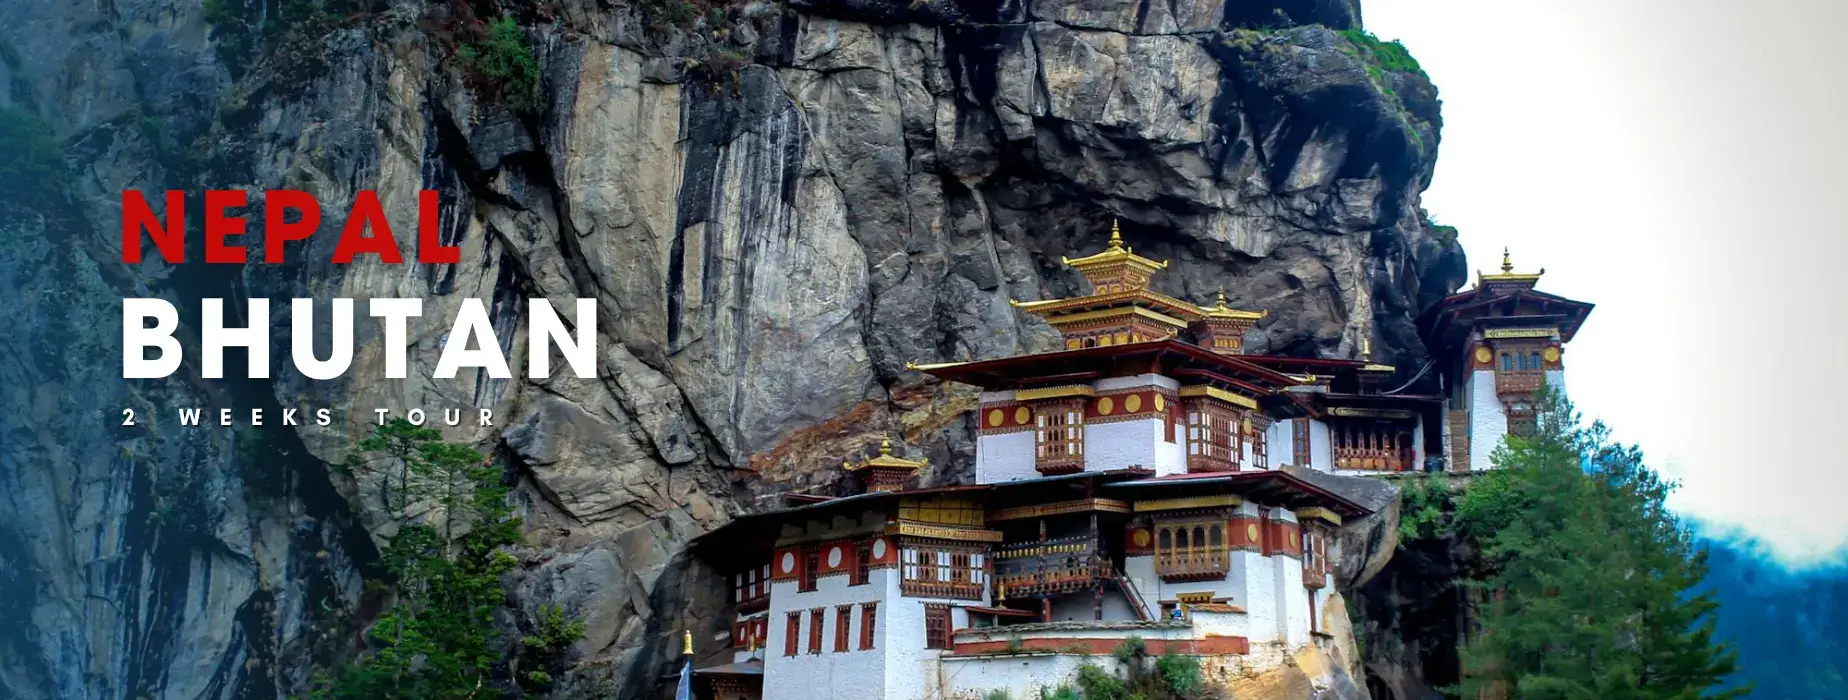 Nepal Bhutan